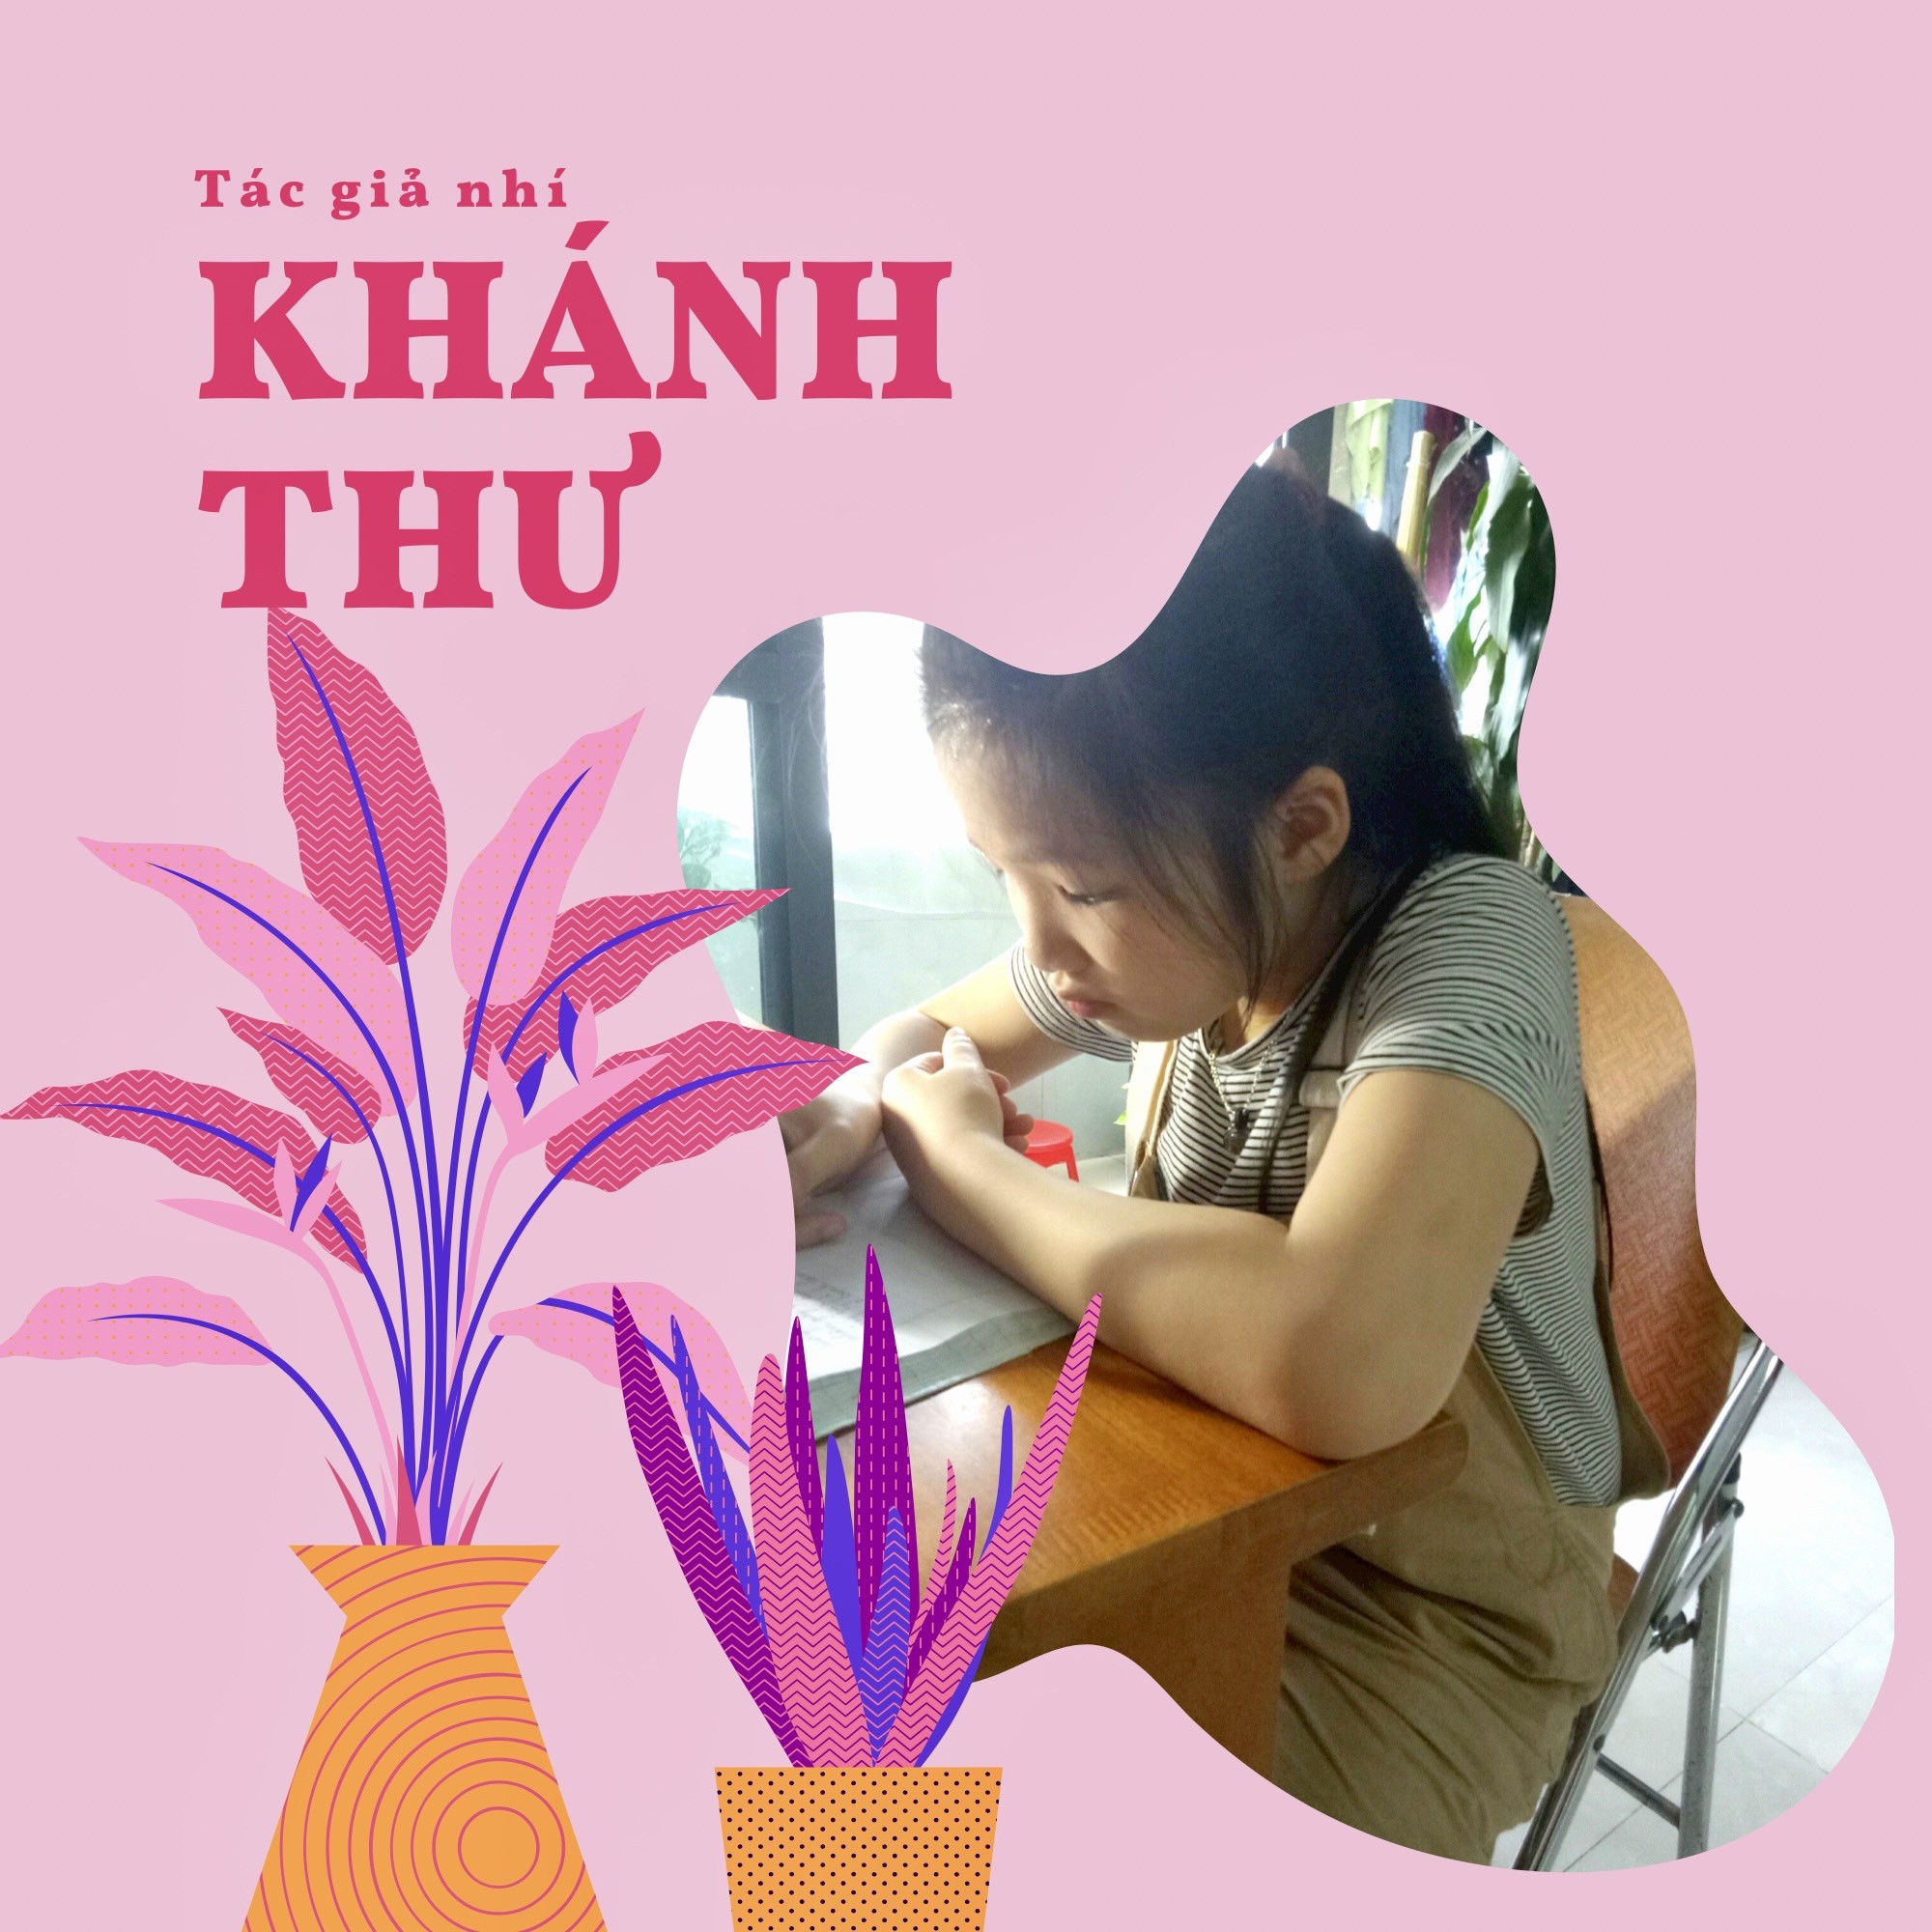 khanh-thu-12-1669300897.jpg